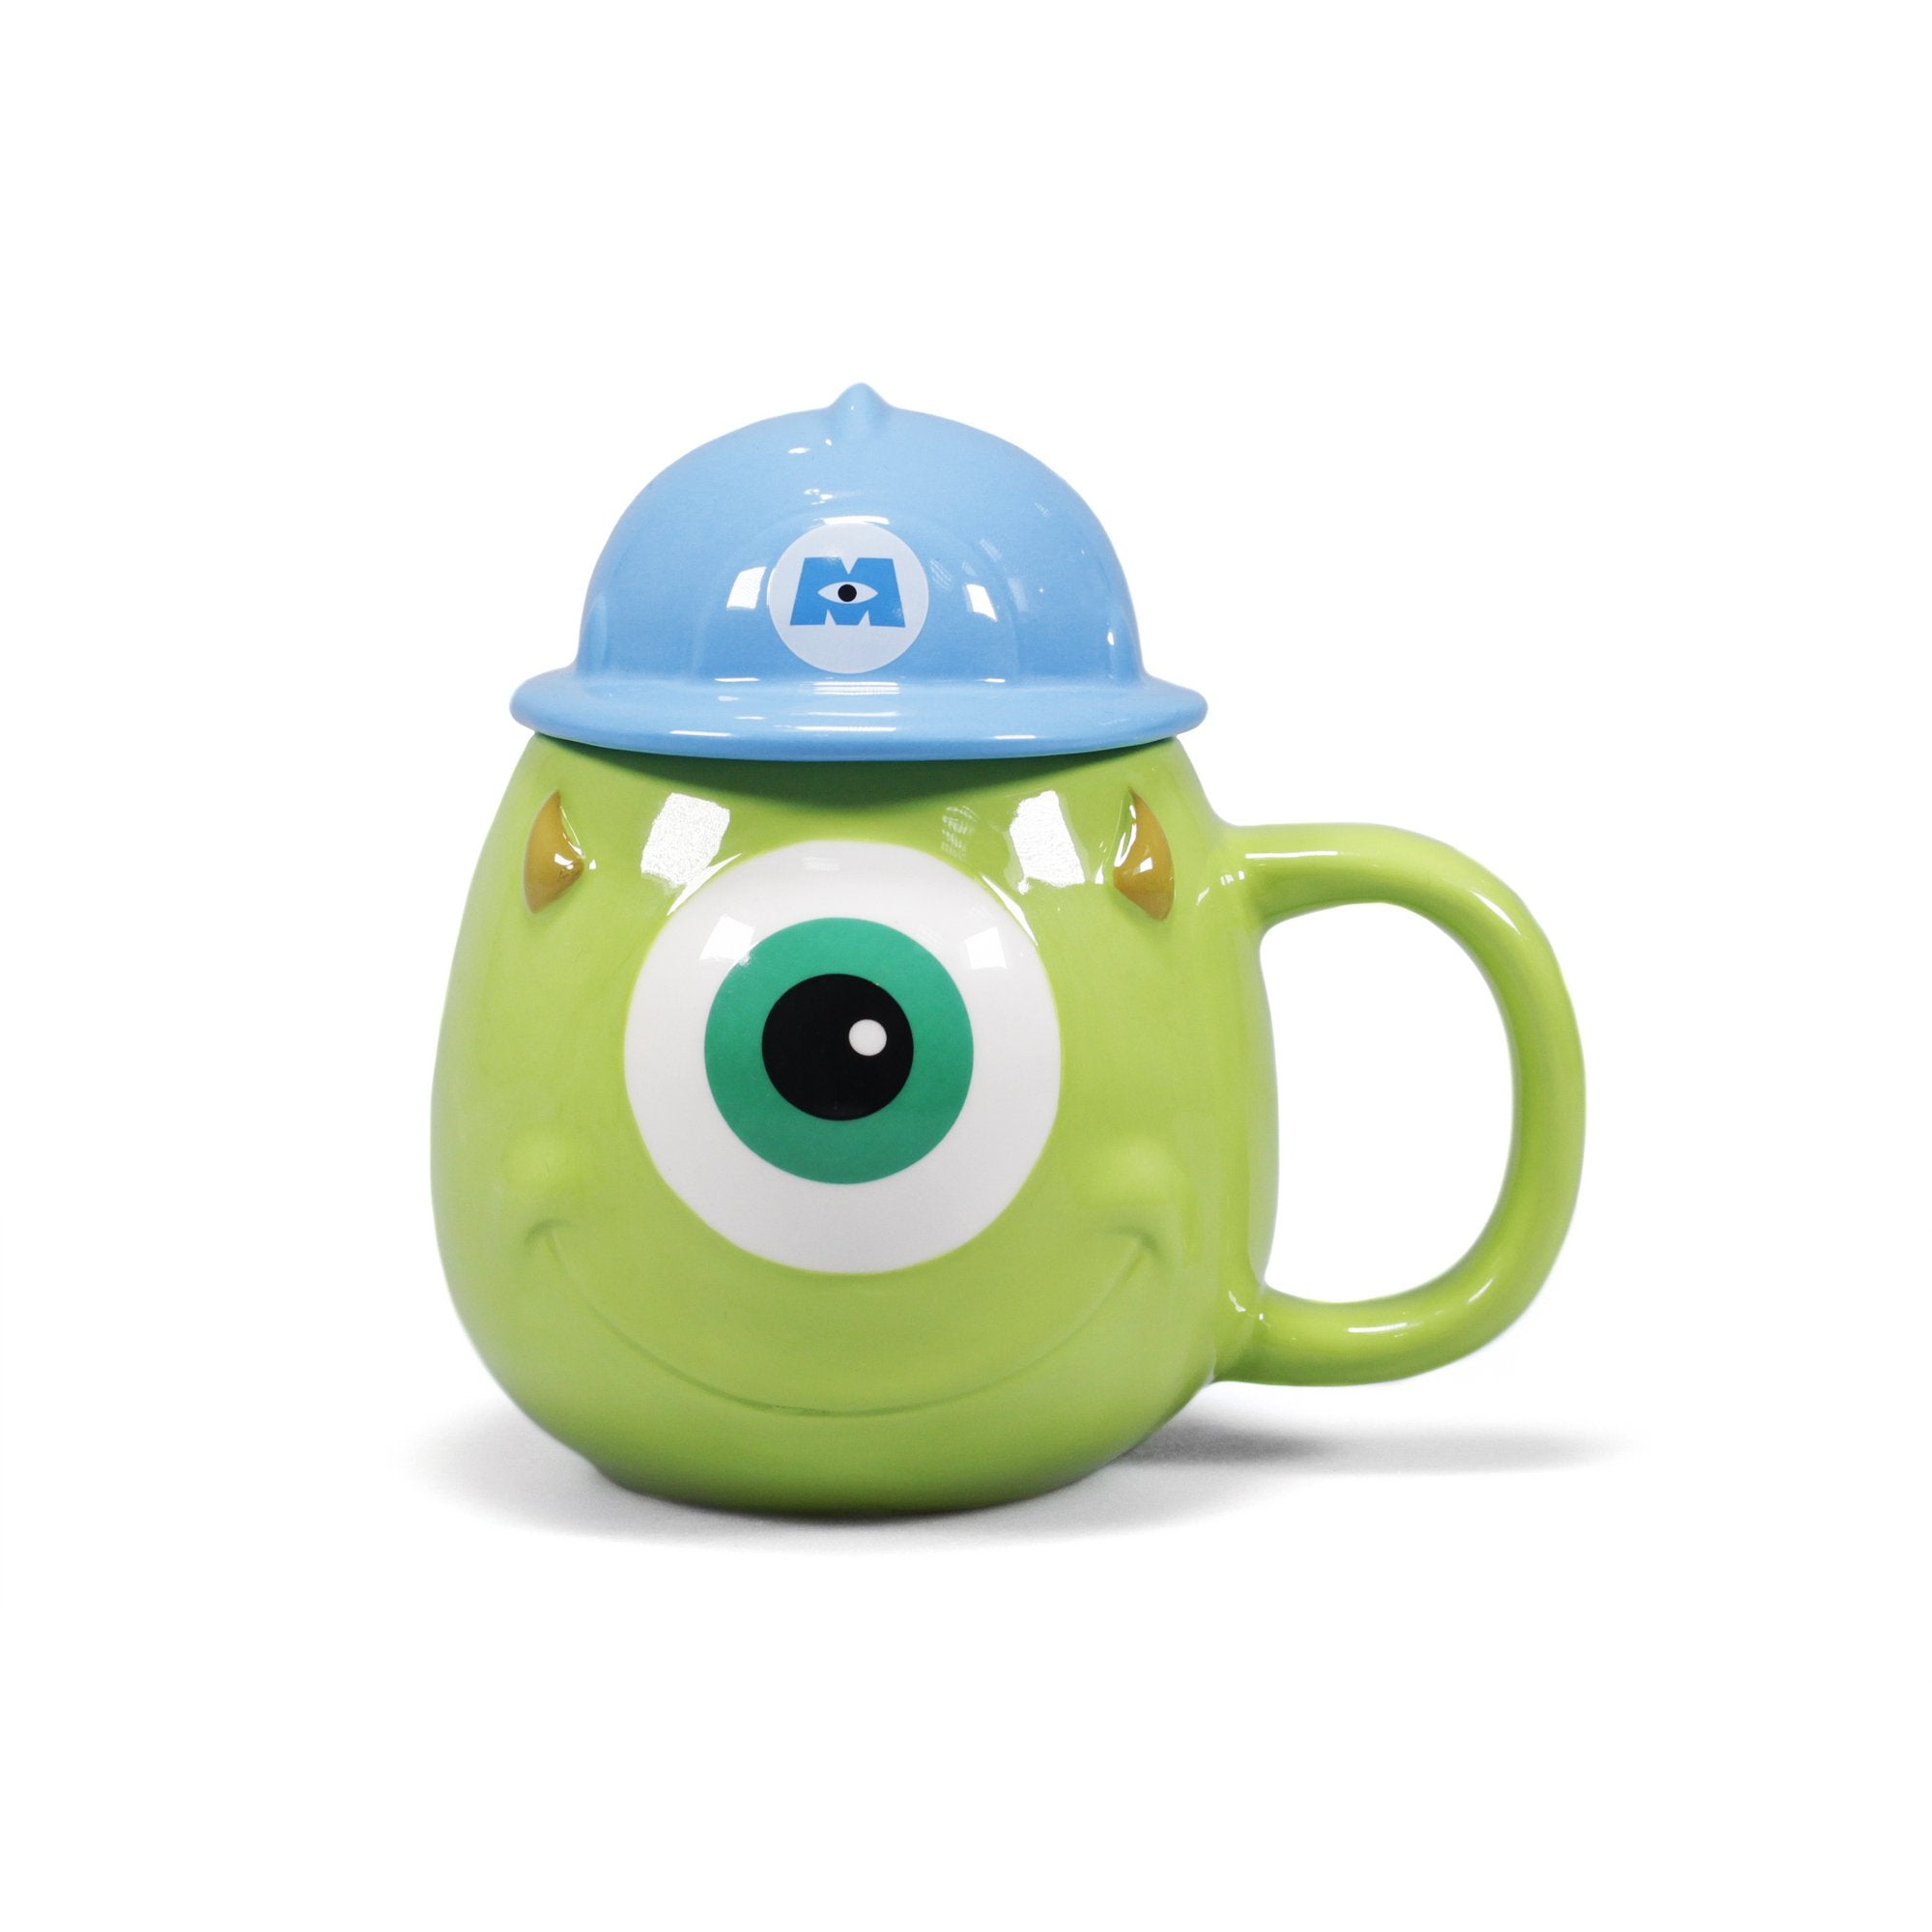 Monsters Inc Shaped Mug - Pixar (Monsters Inc Mike)